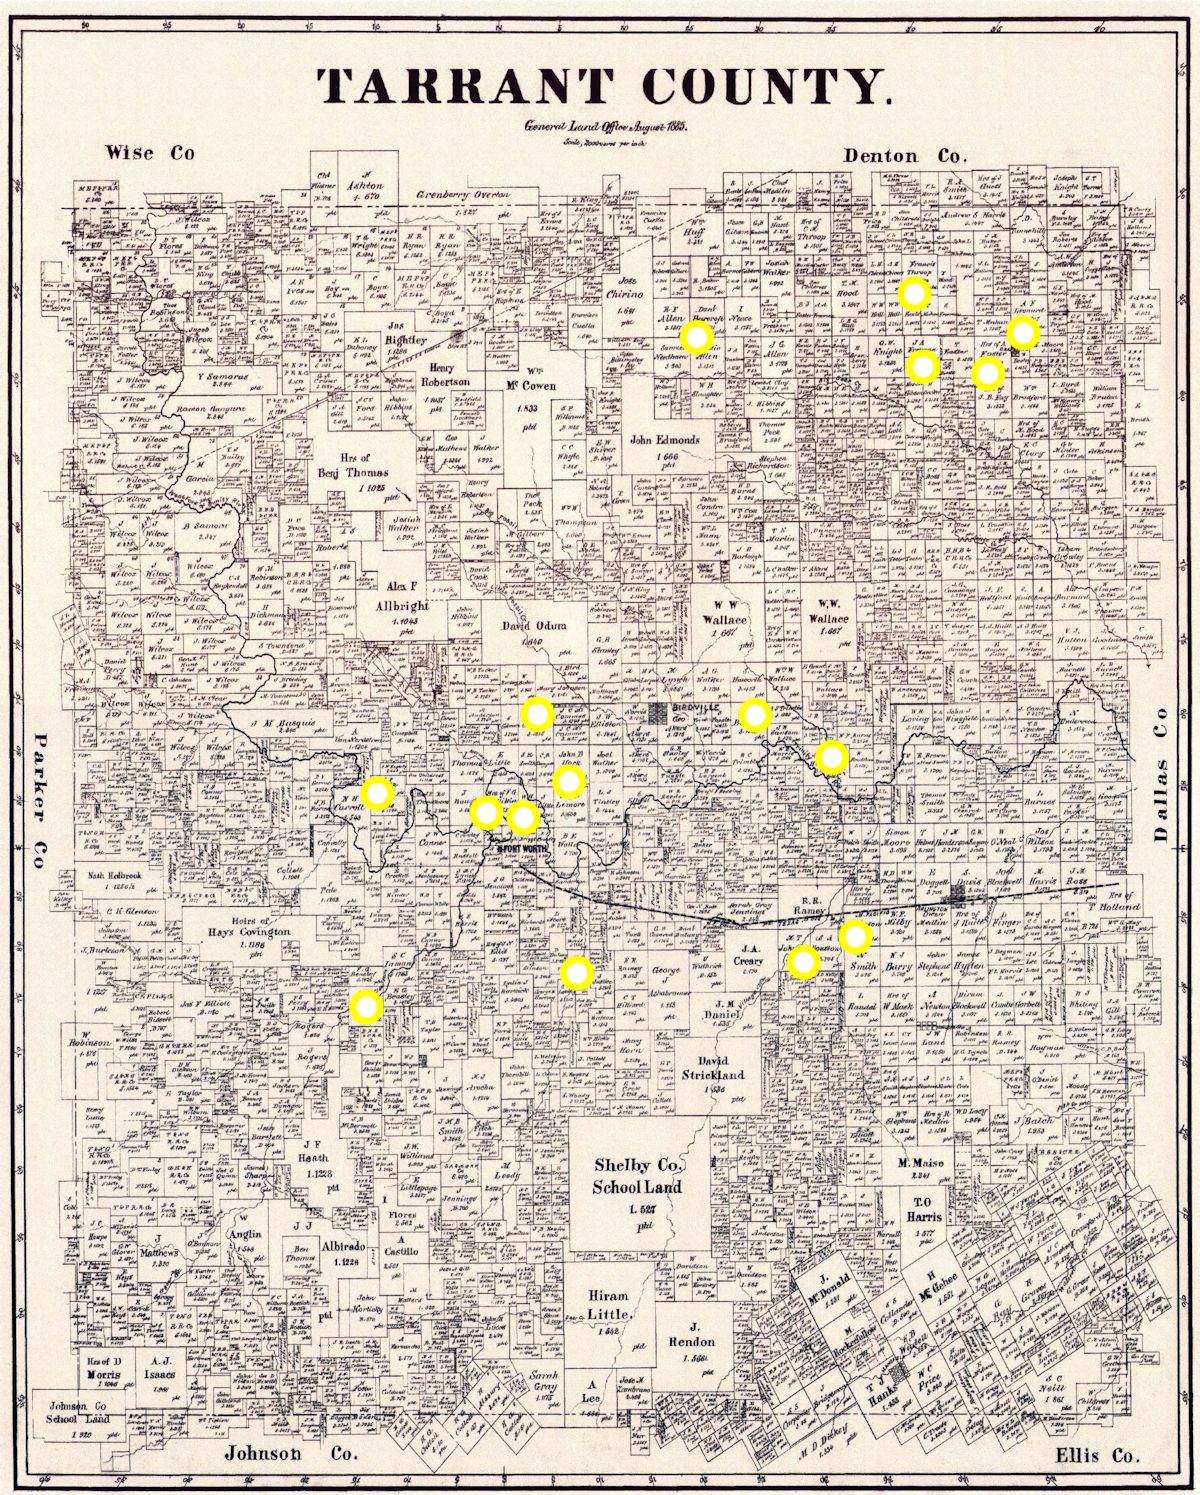 1850 census 1885 Tarrant County